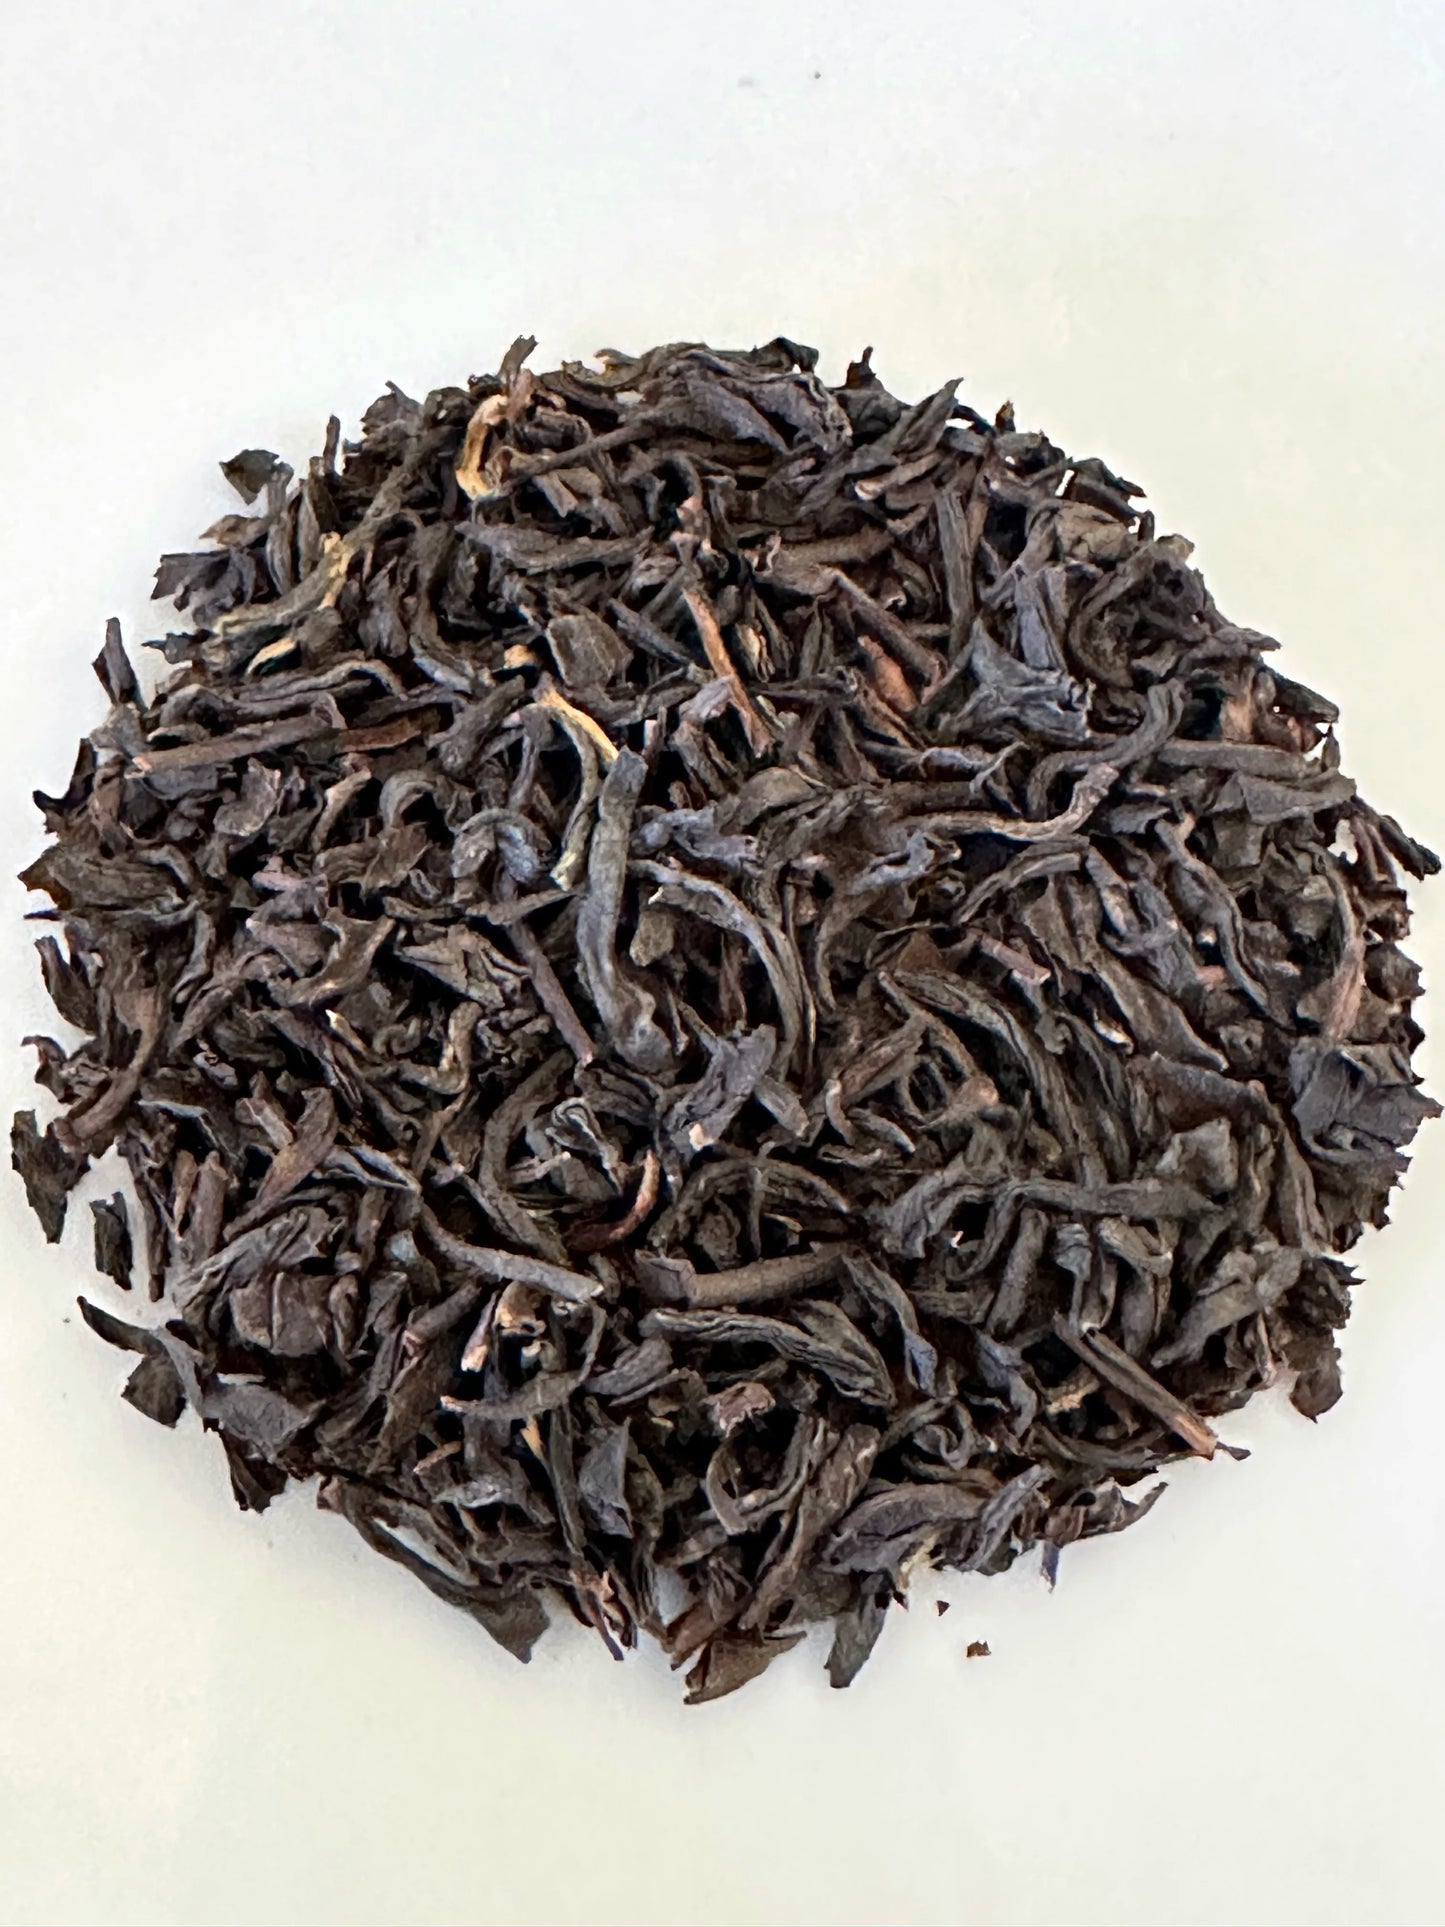 Pile of China Black Tea